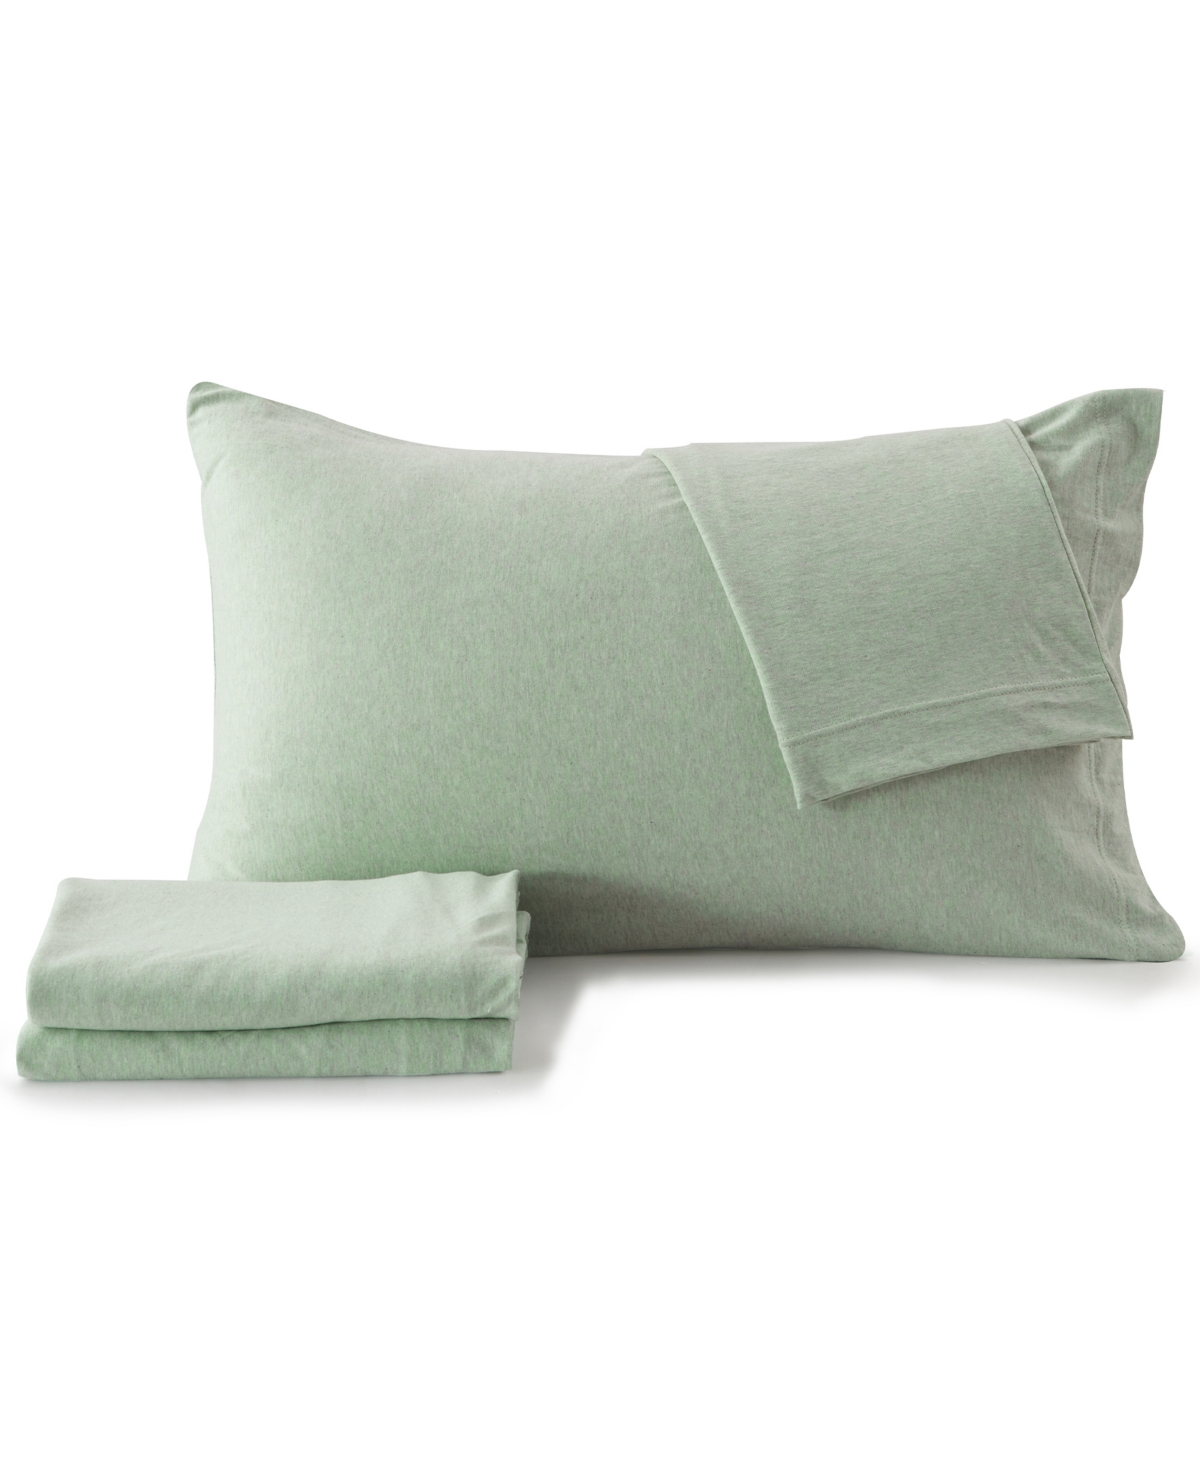 Premium Comforts Heathered Melange T-shirt Jersey Knit Cotton Blend 4 Piece Sheet Set, California King In Green